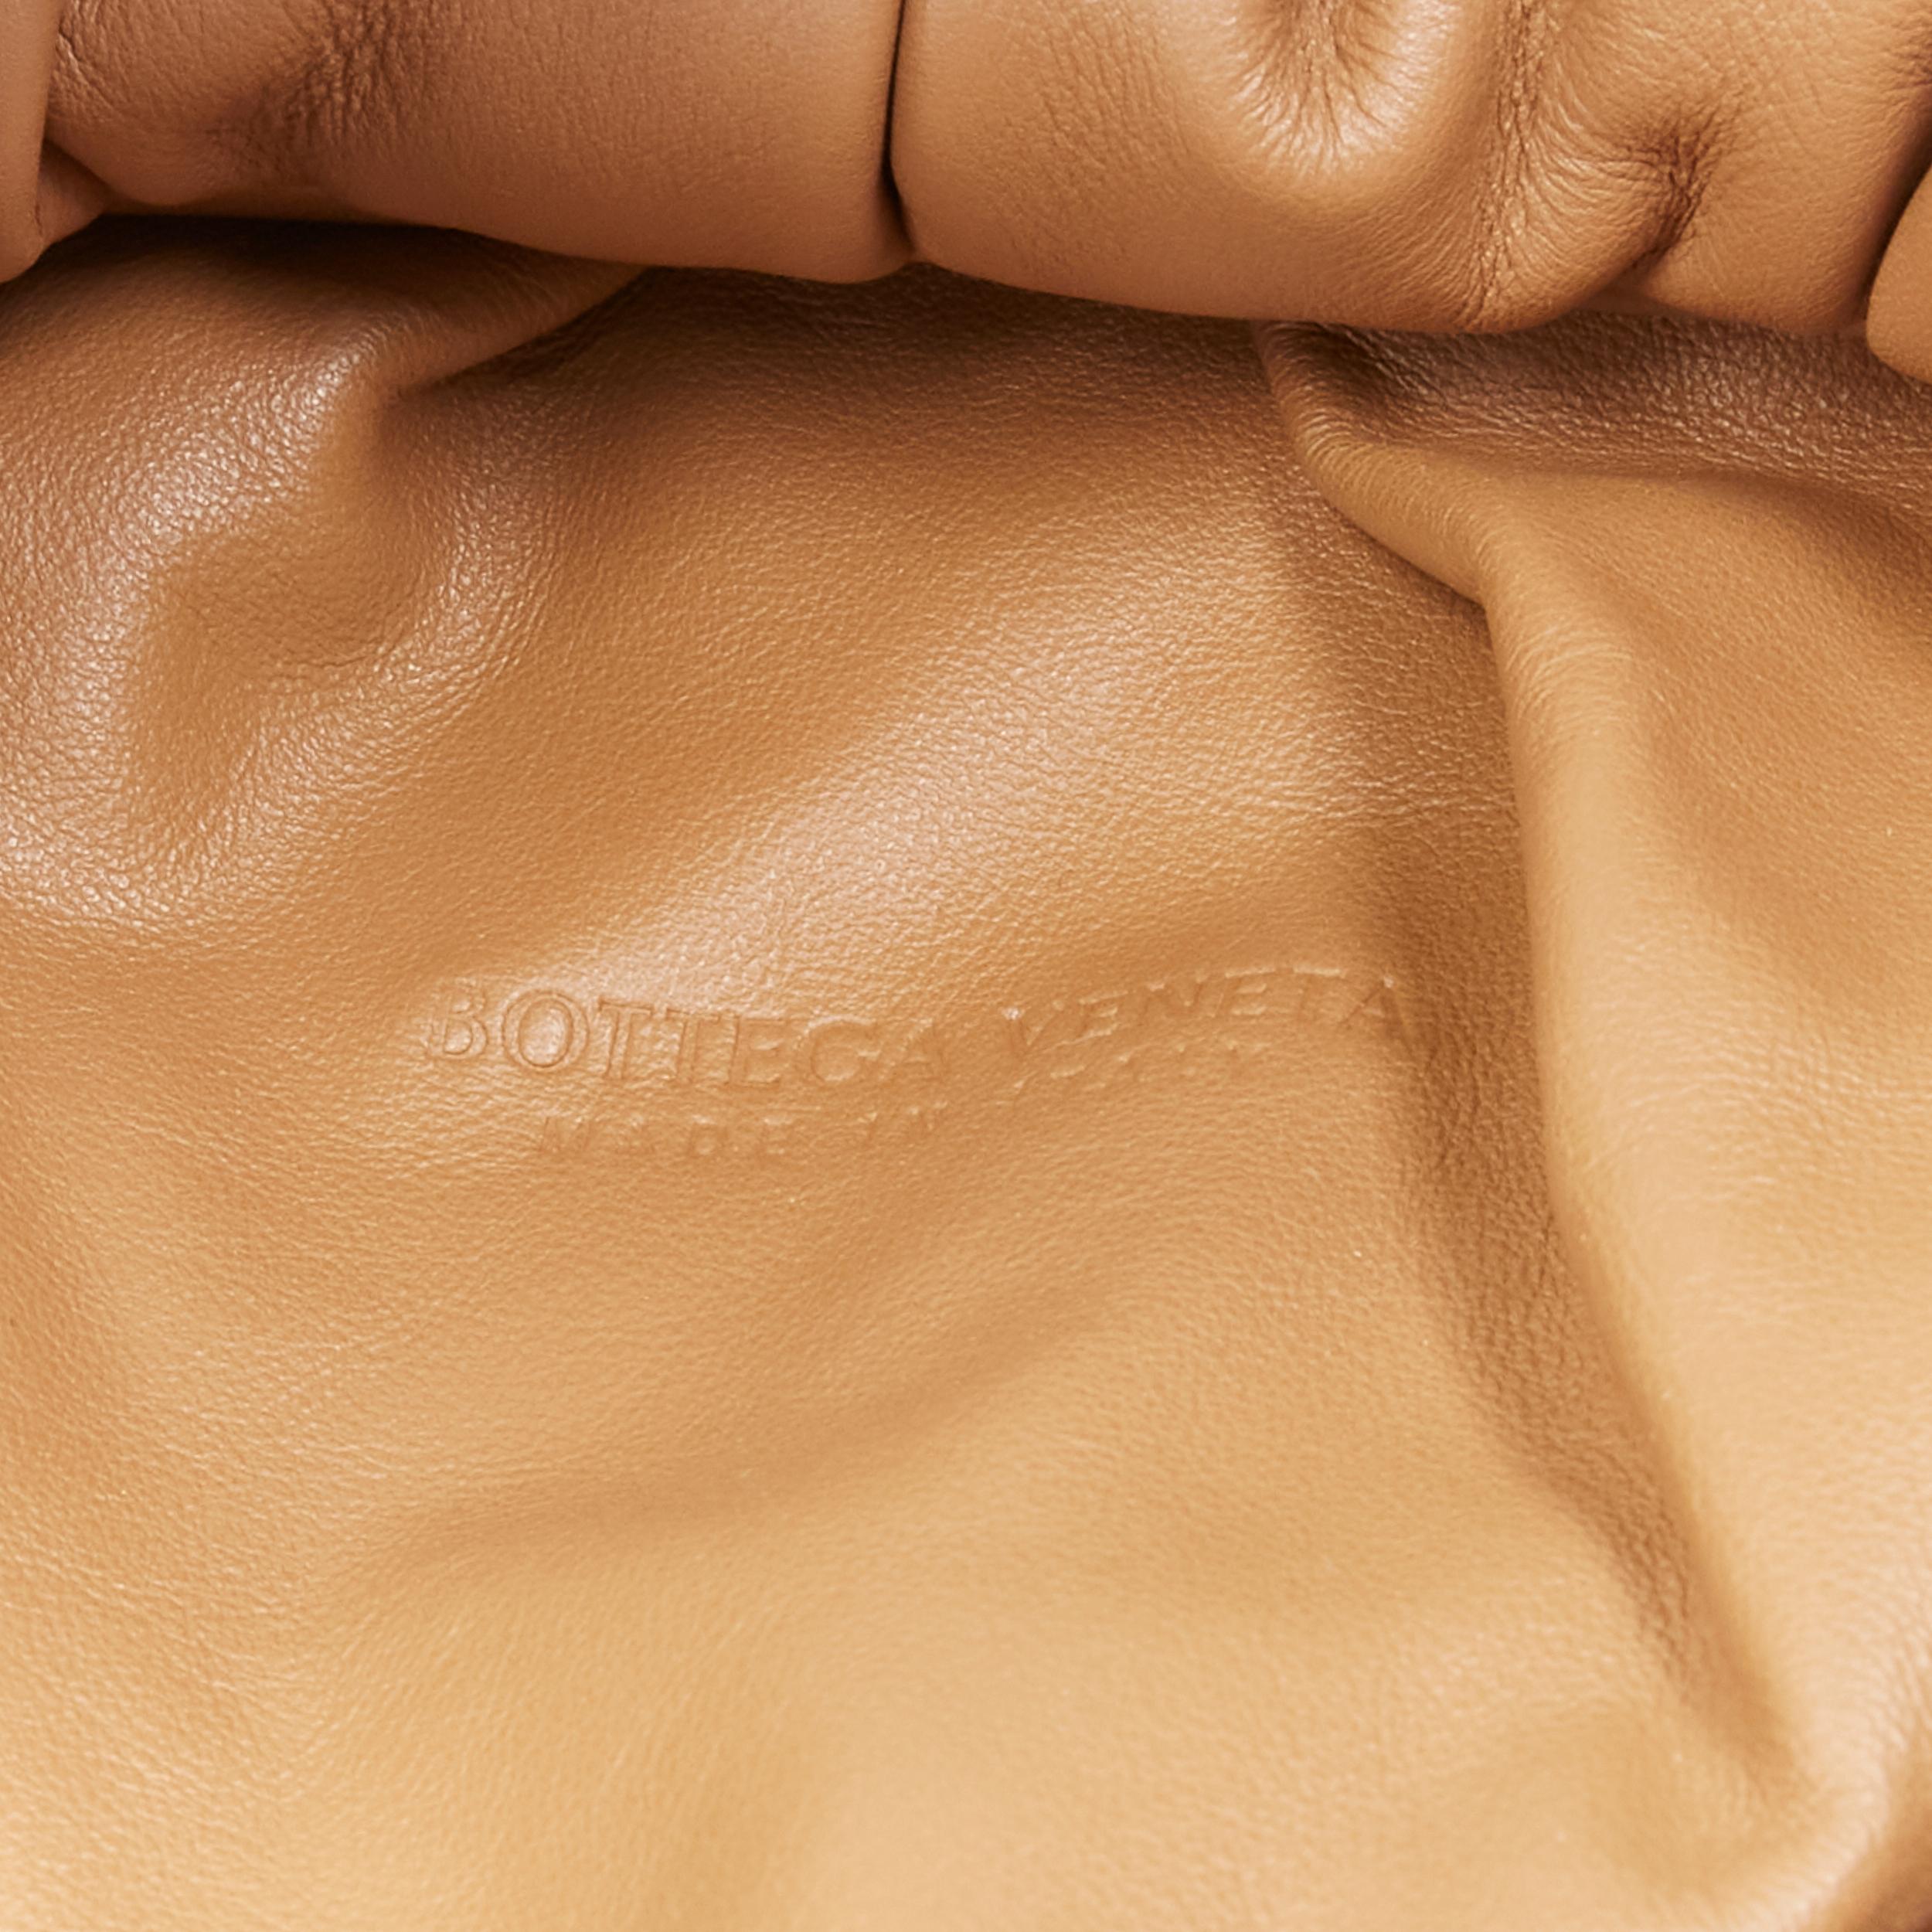 BOTTEGA VENETA Daniel Lee The Shoulder Pouch brown leather gathered hobo bag For Sale 4